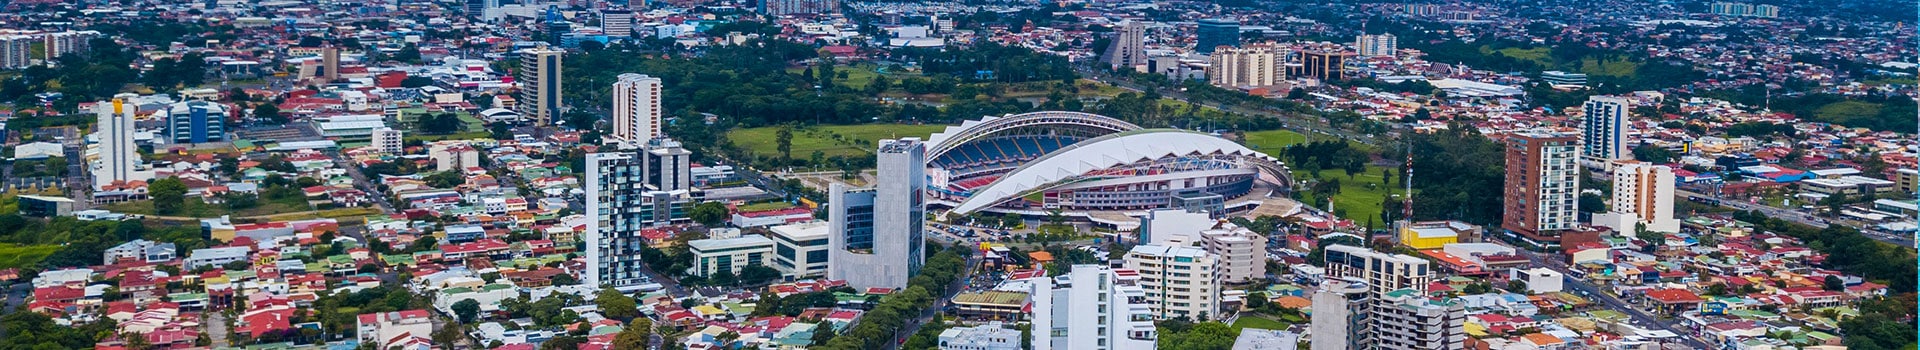 Cidade do panamá - San jose